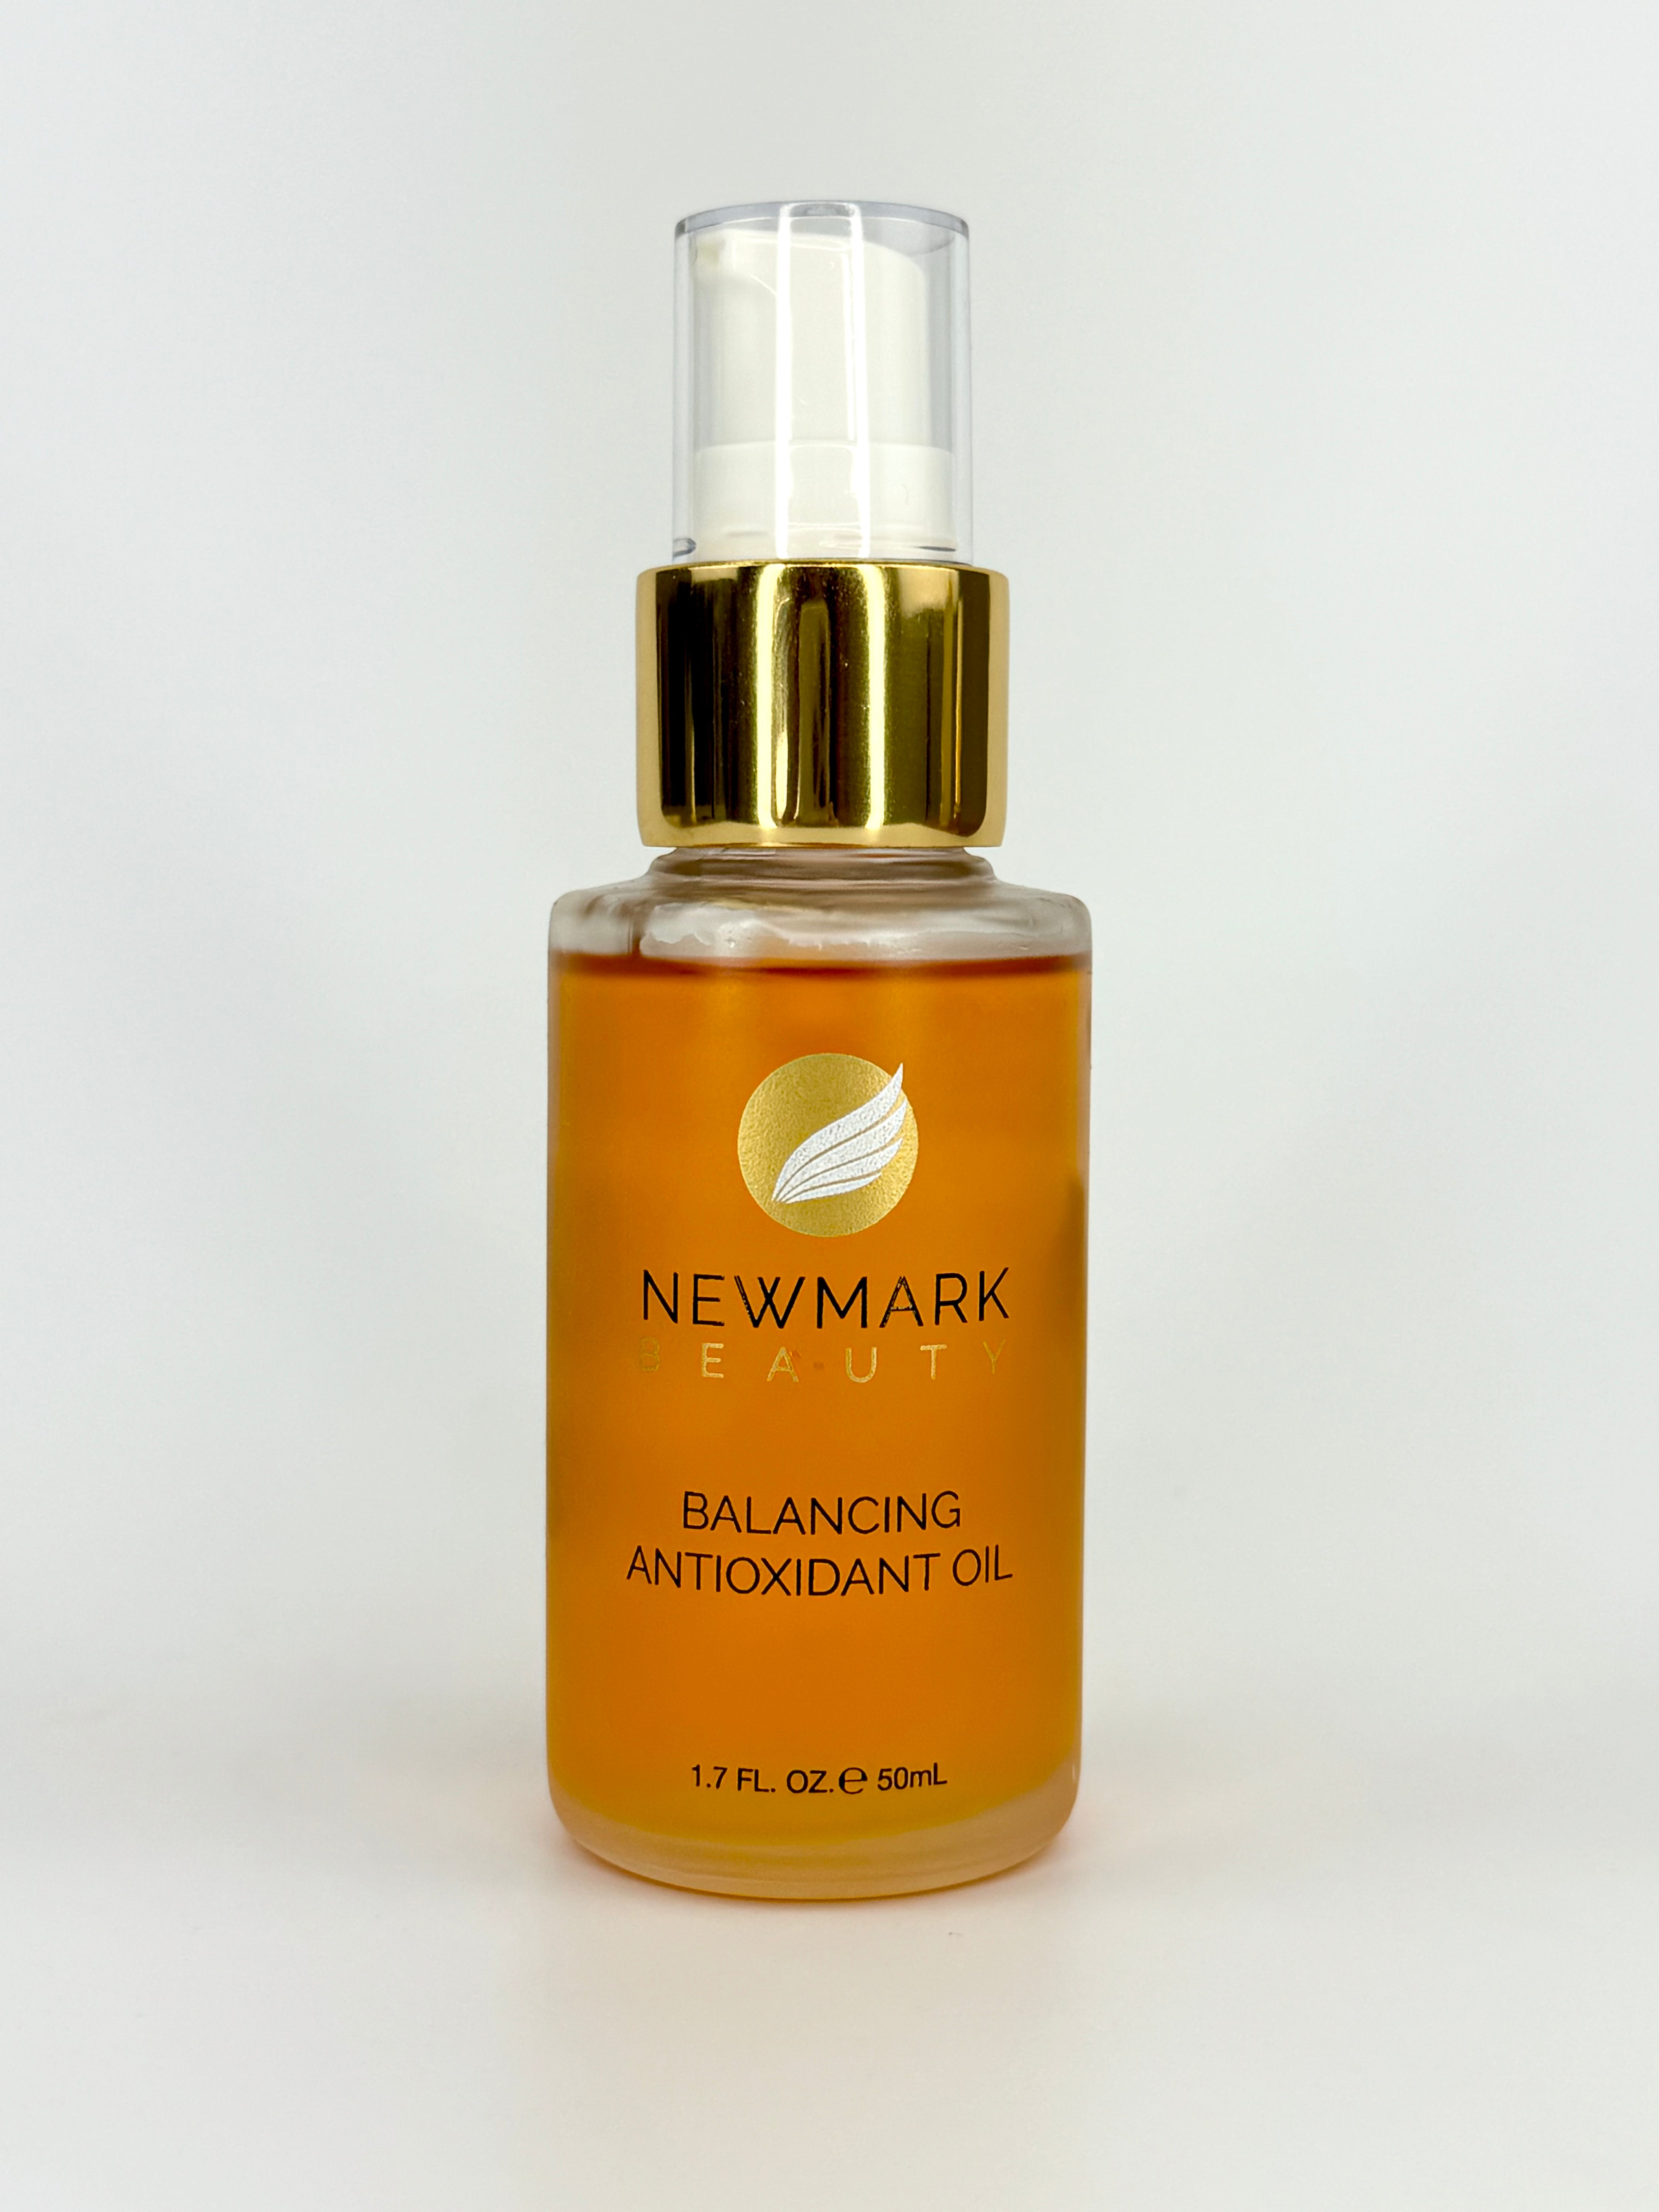 Balancing Antioxidant Oil by Newmark Beauty